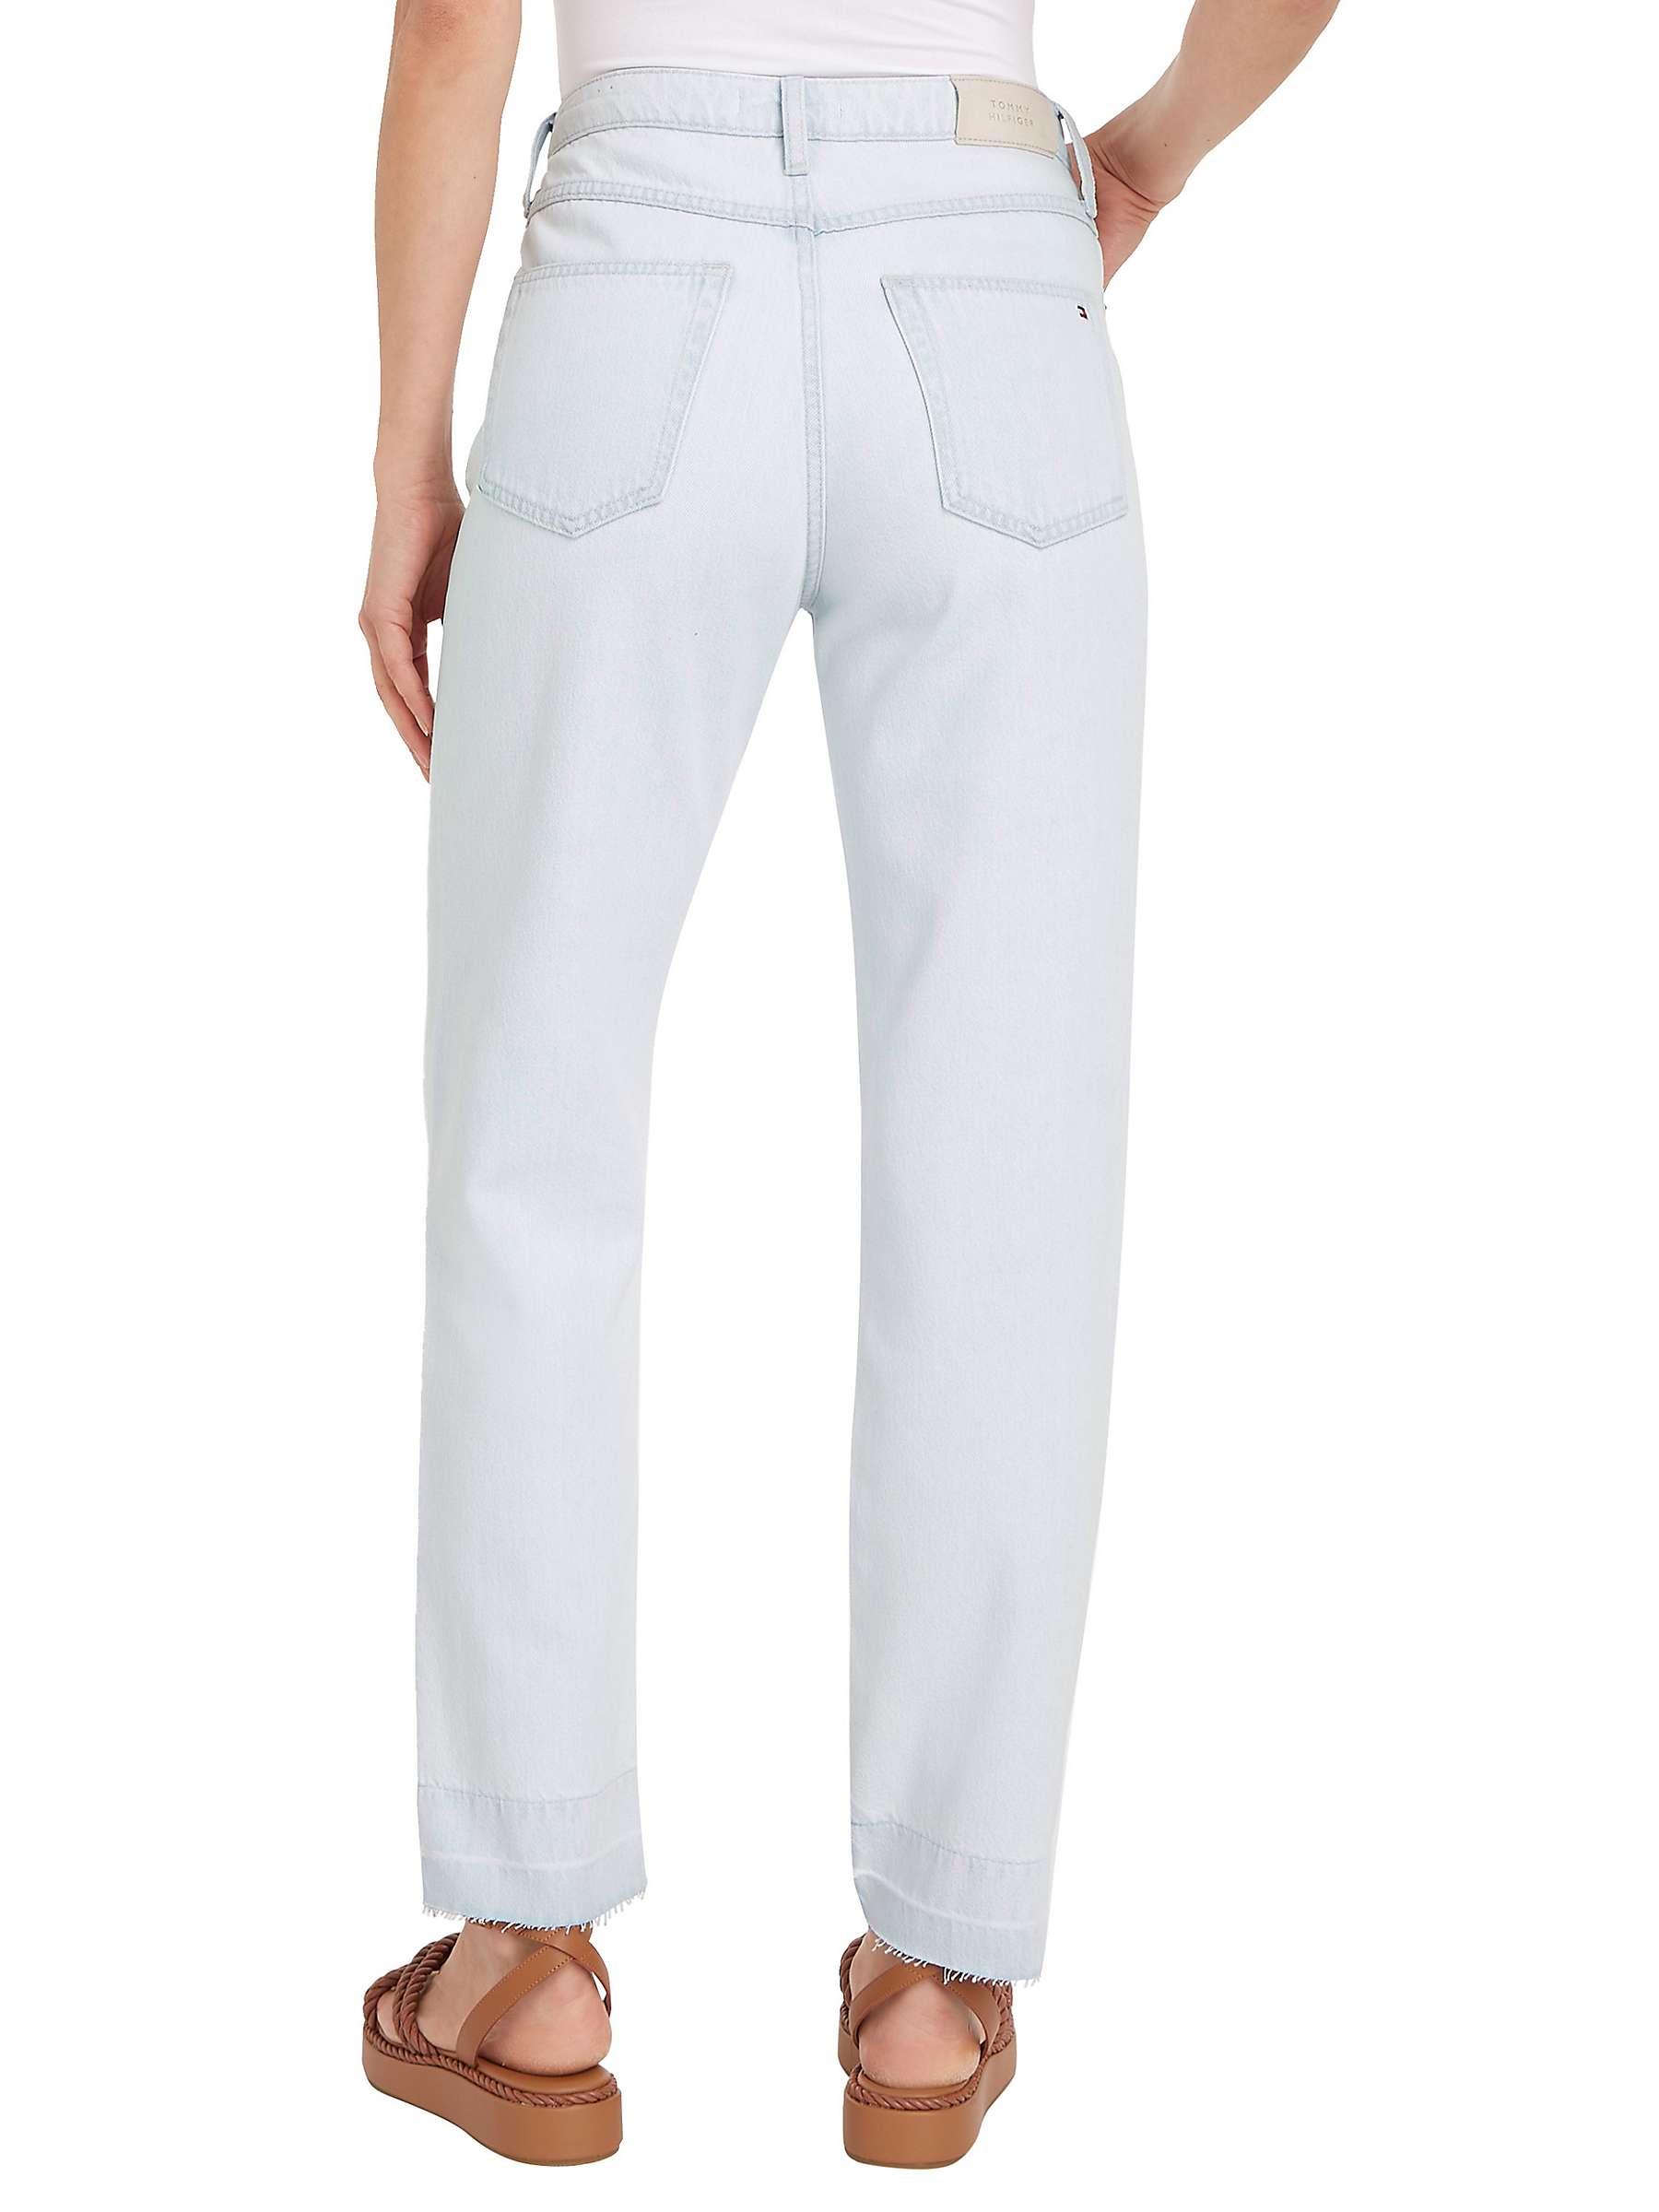 Buy Tommy Hilfiger Women's Kira Straight Jeans, Light Blue Online at johnlewis.com